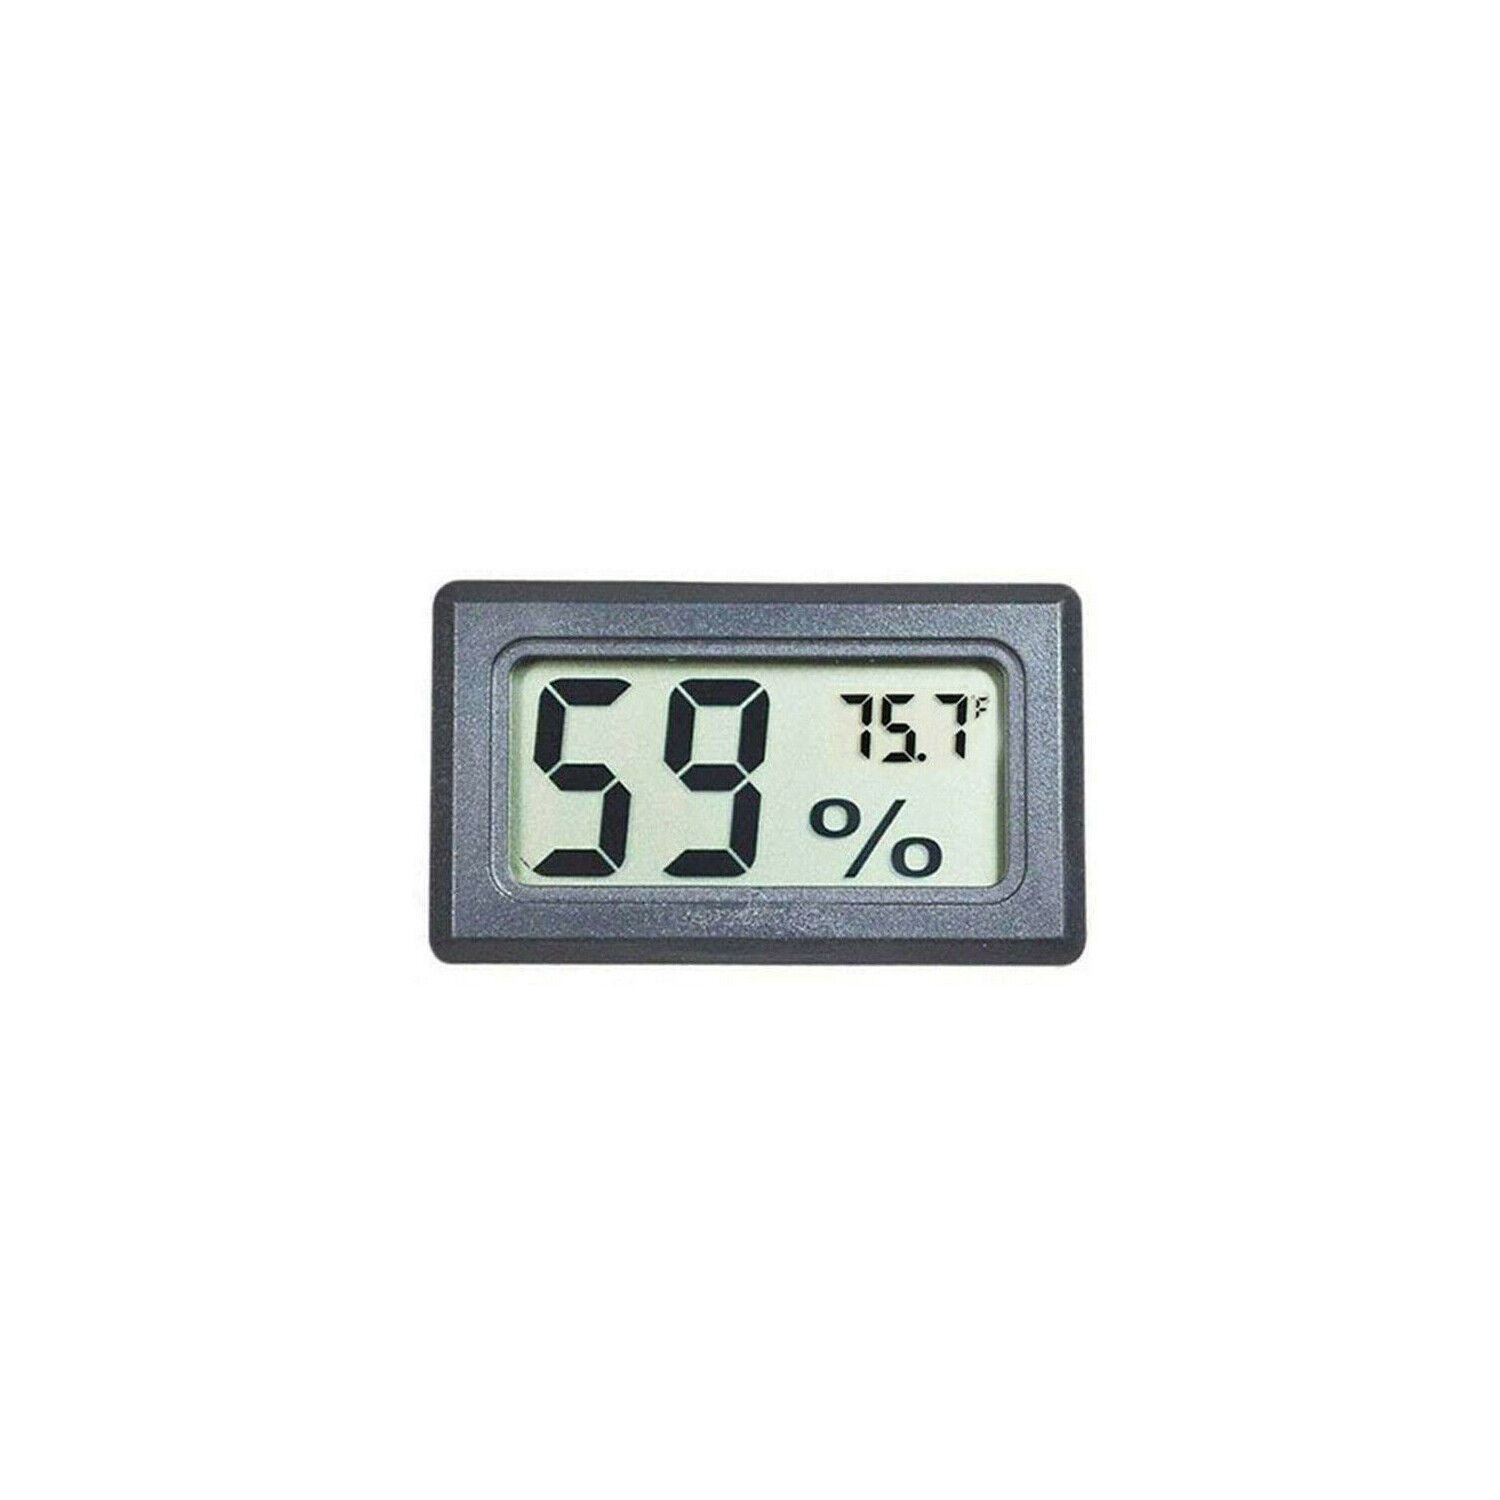 Indoor Hygrometer Thermometer Temperature Humidity Fahrenheit LCD Digital Meter